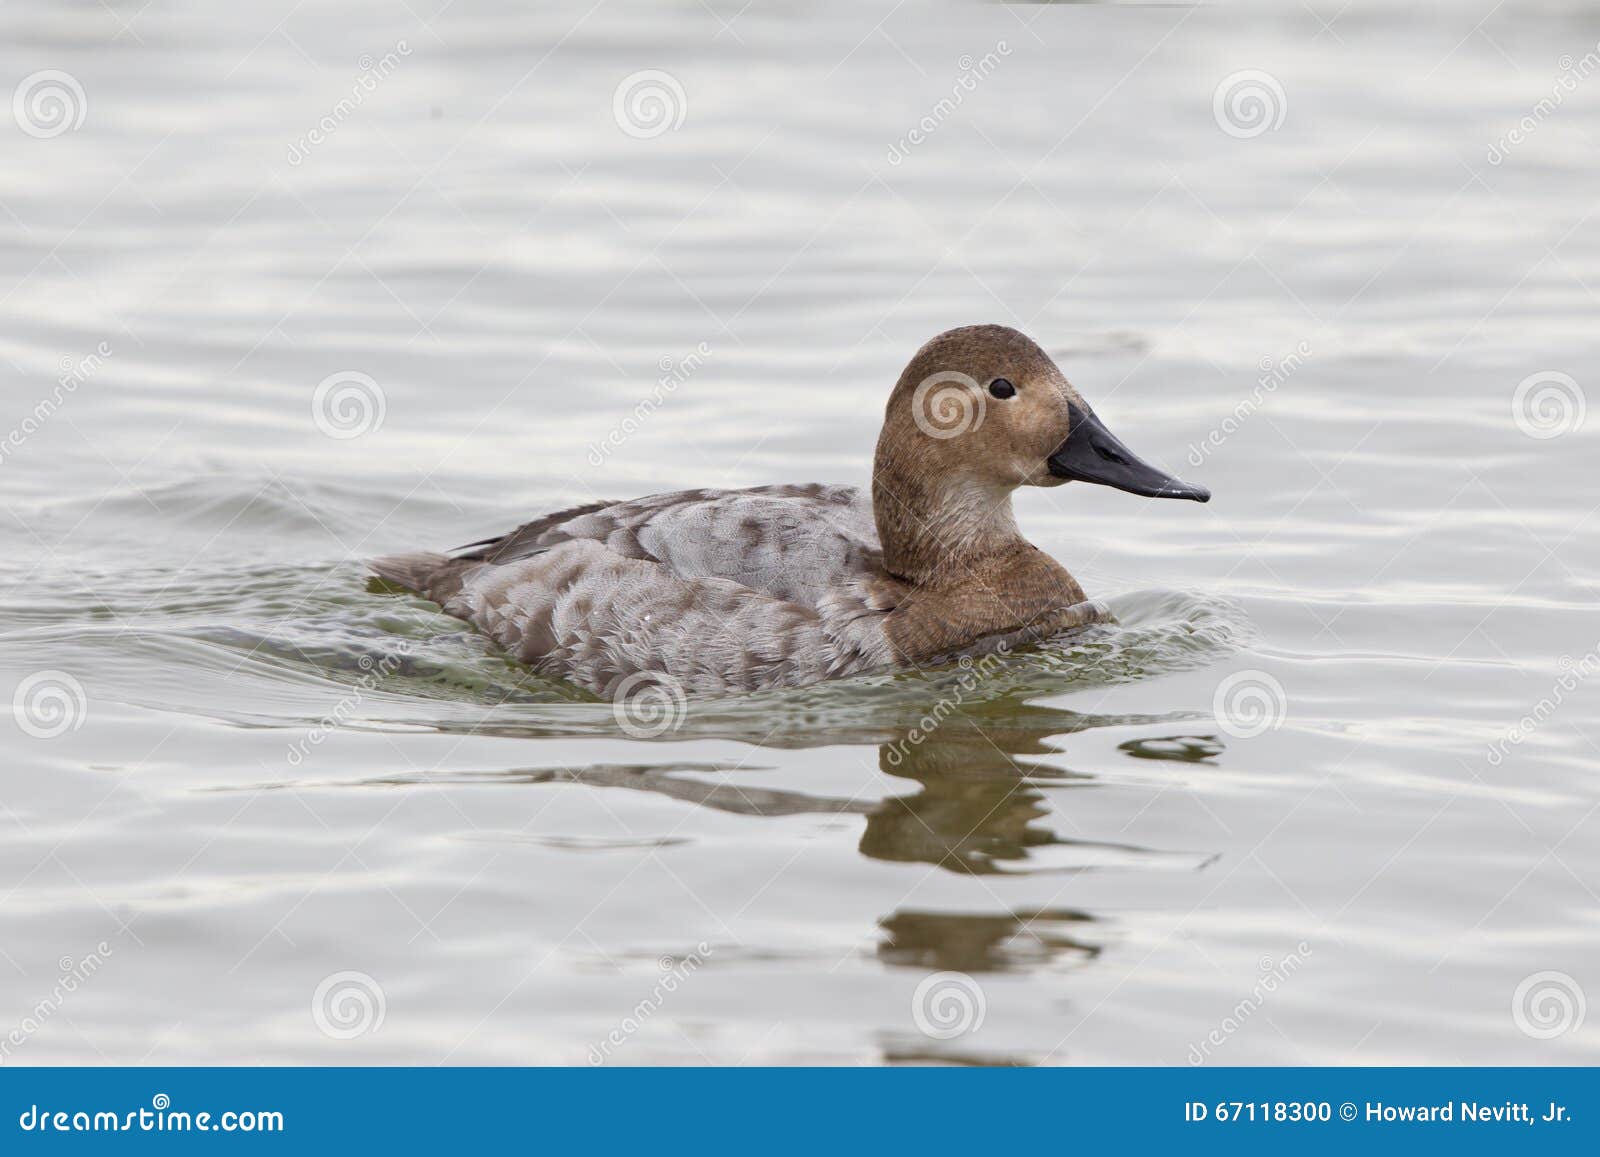 canvasback female duck in water